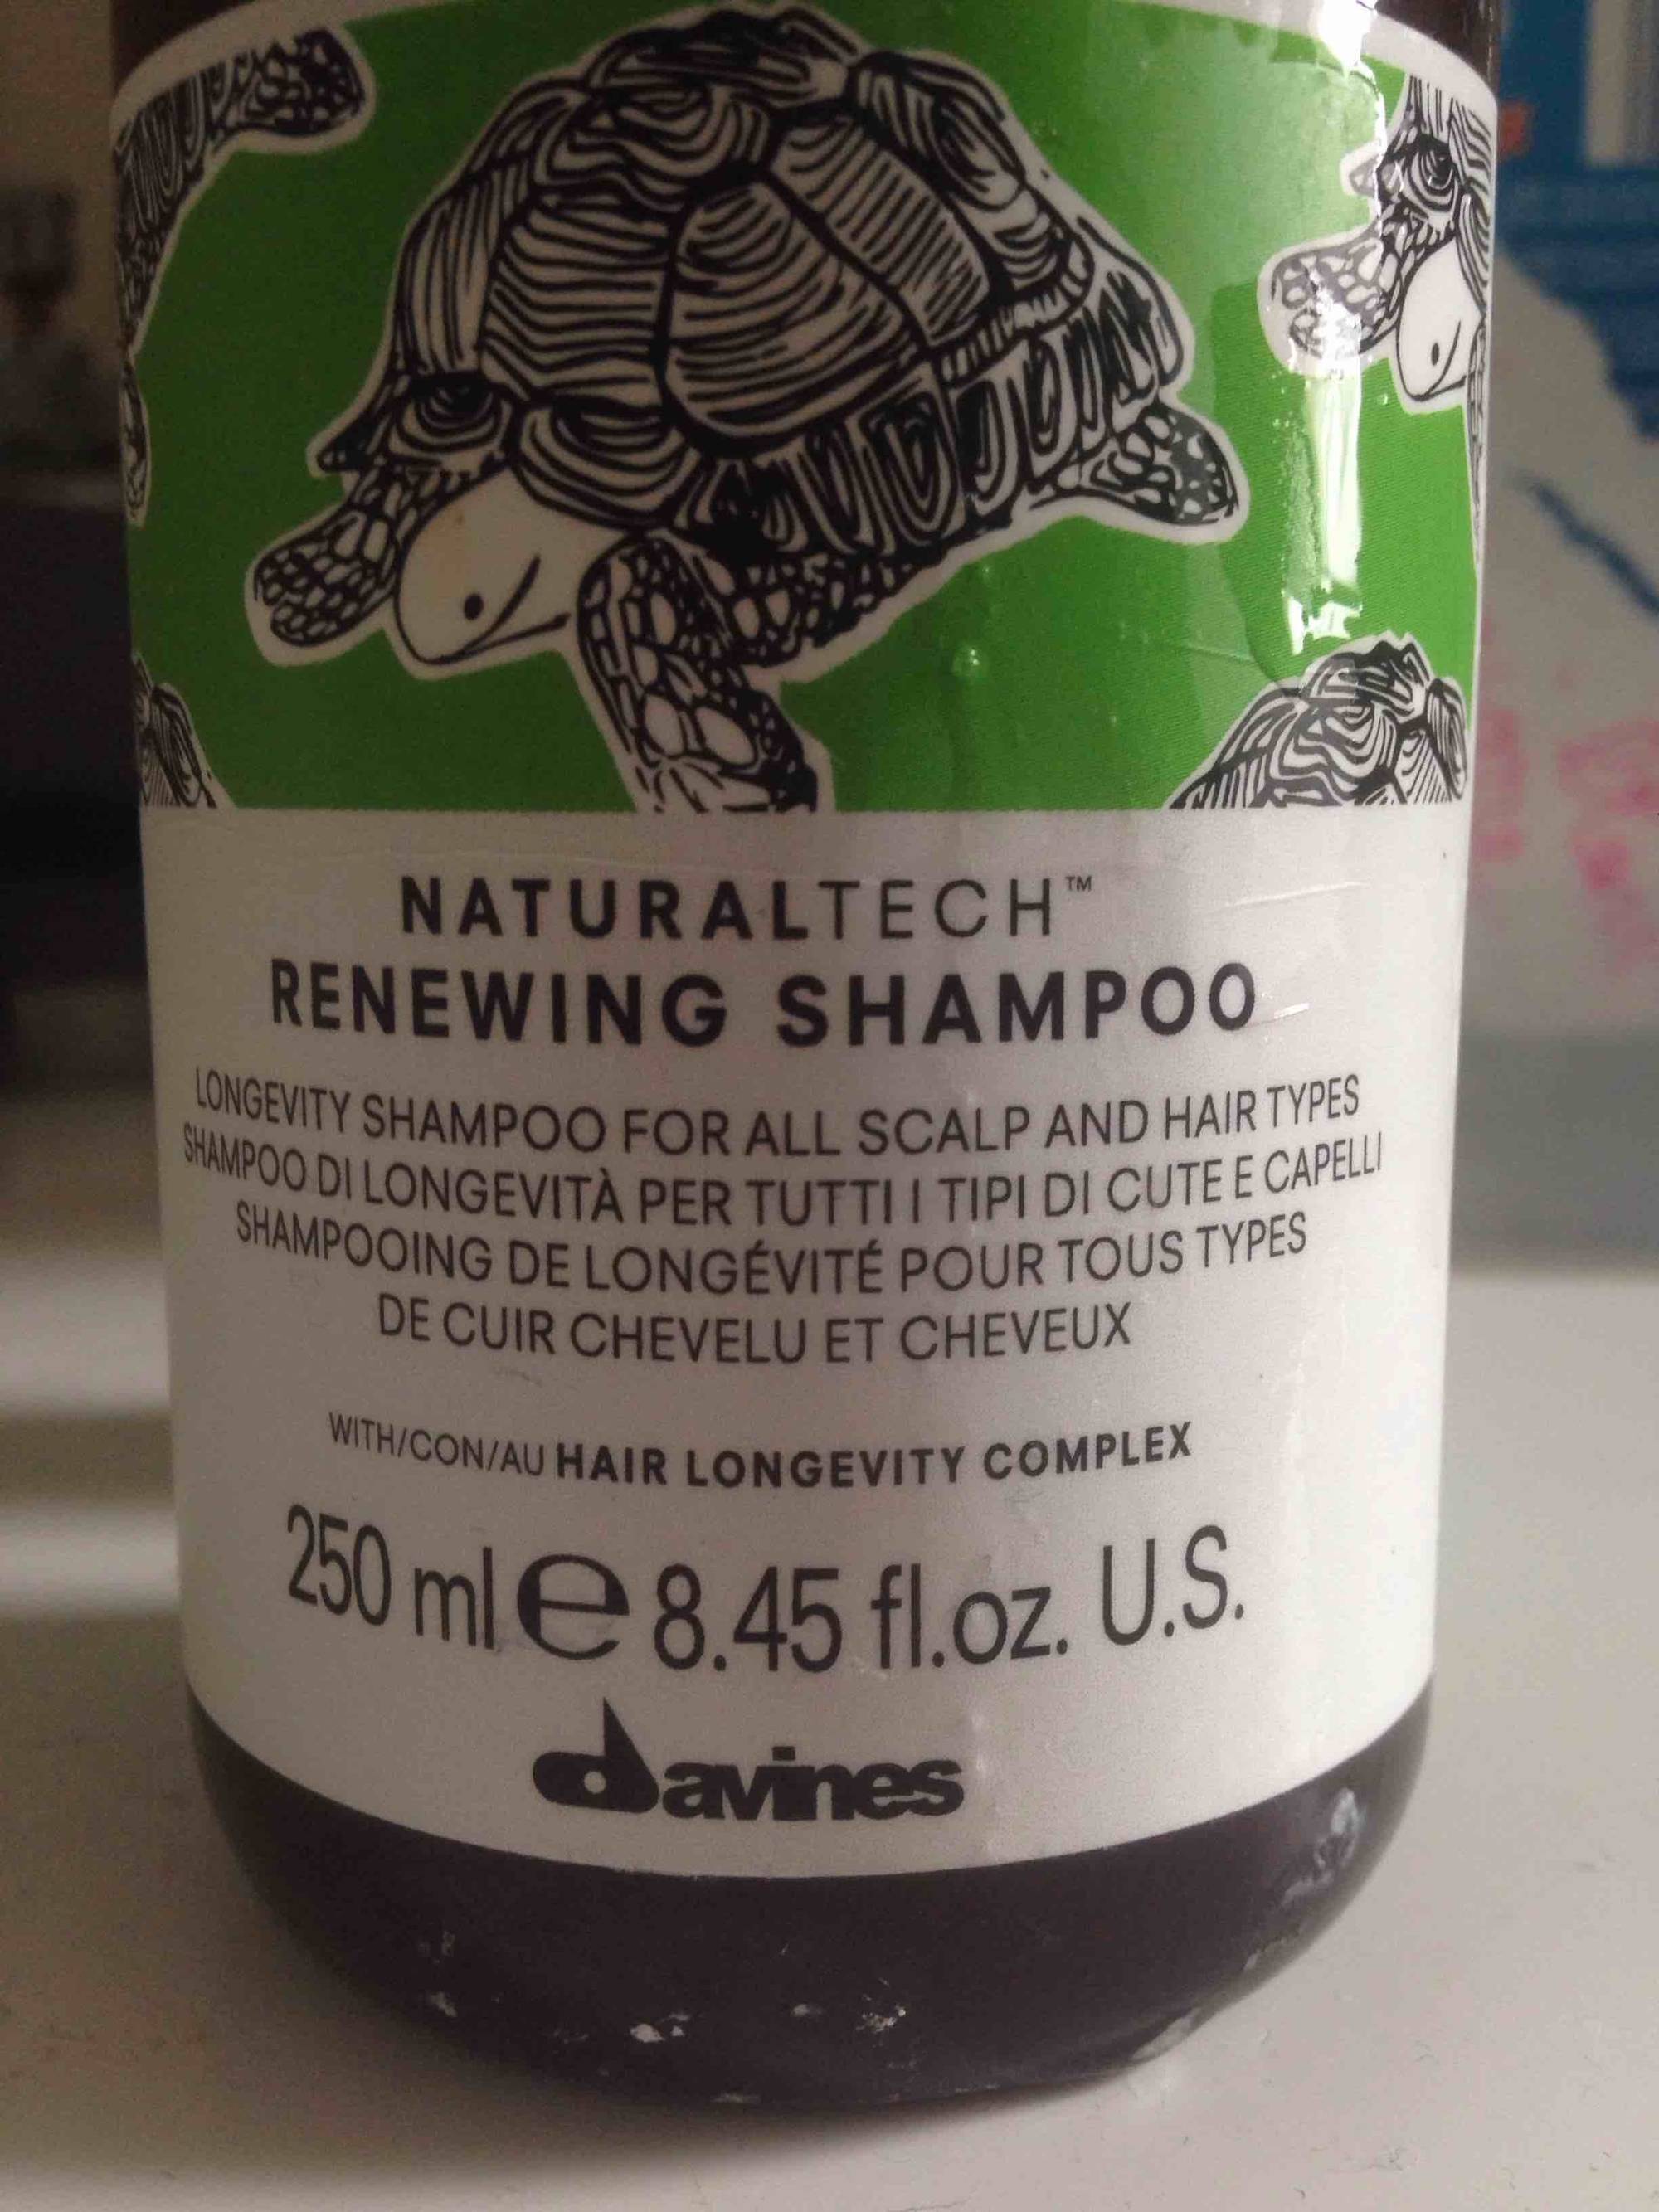 DAVINES - Naturaltech - Renewing shampoo